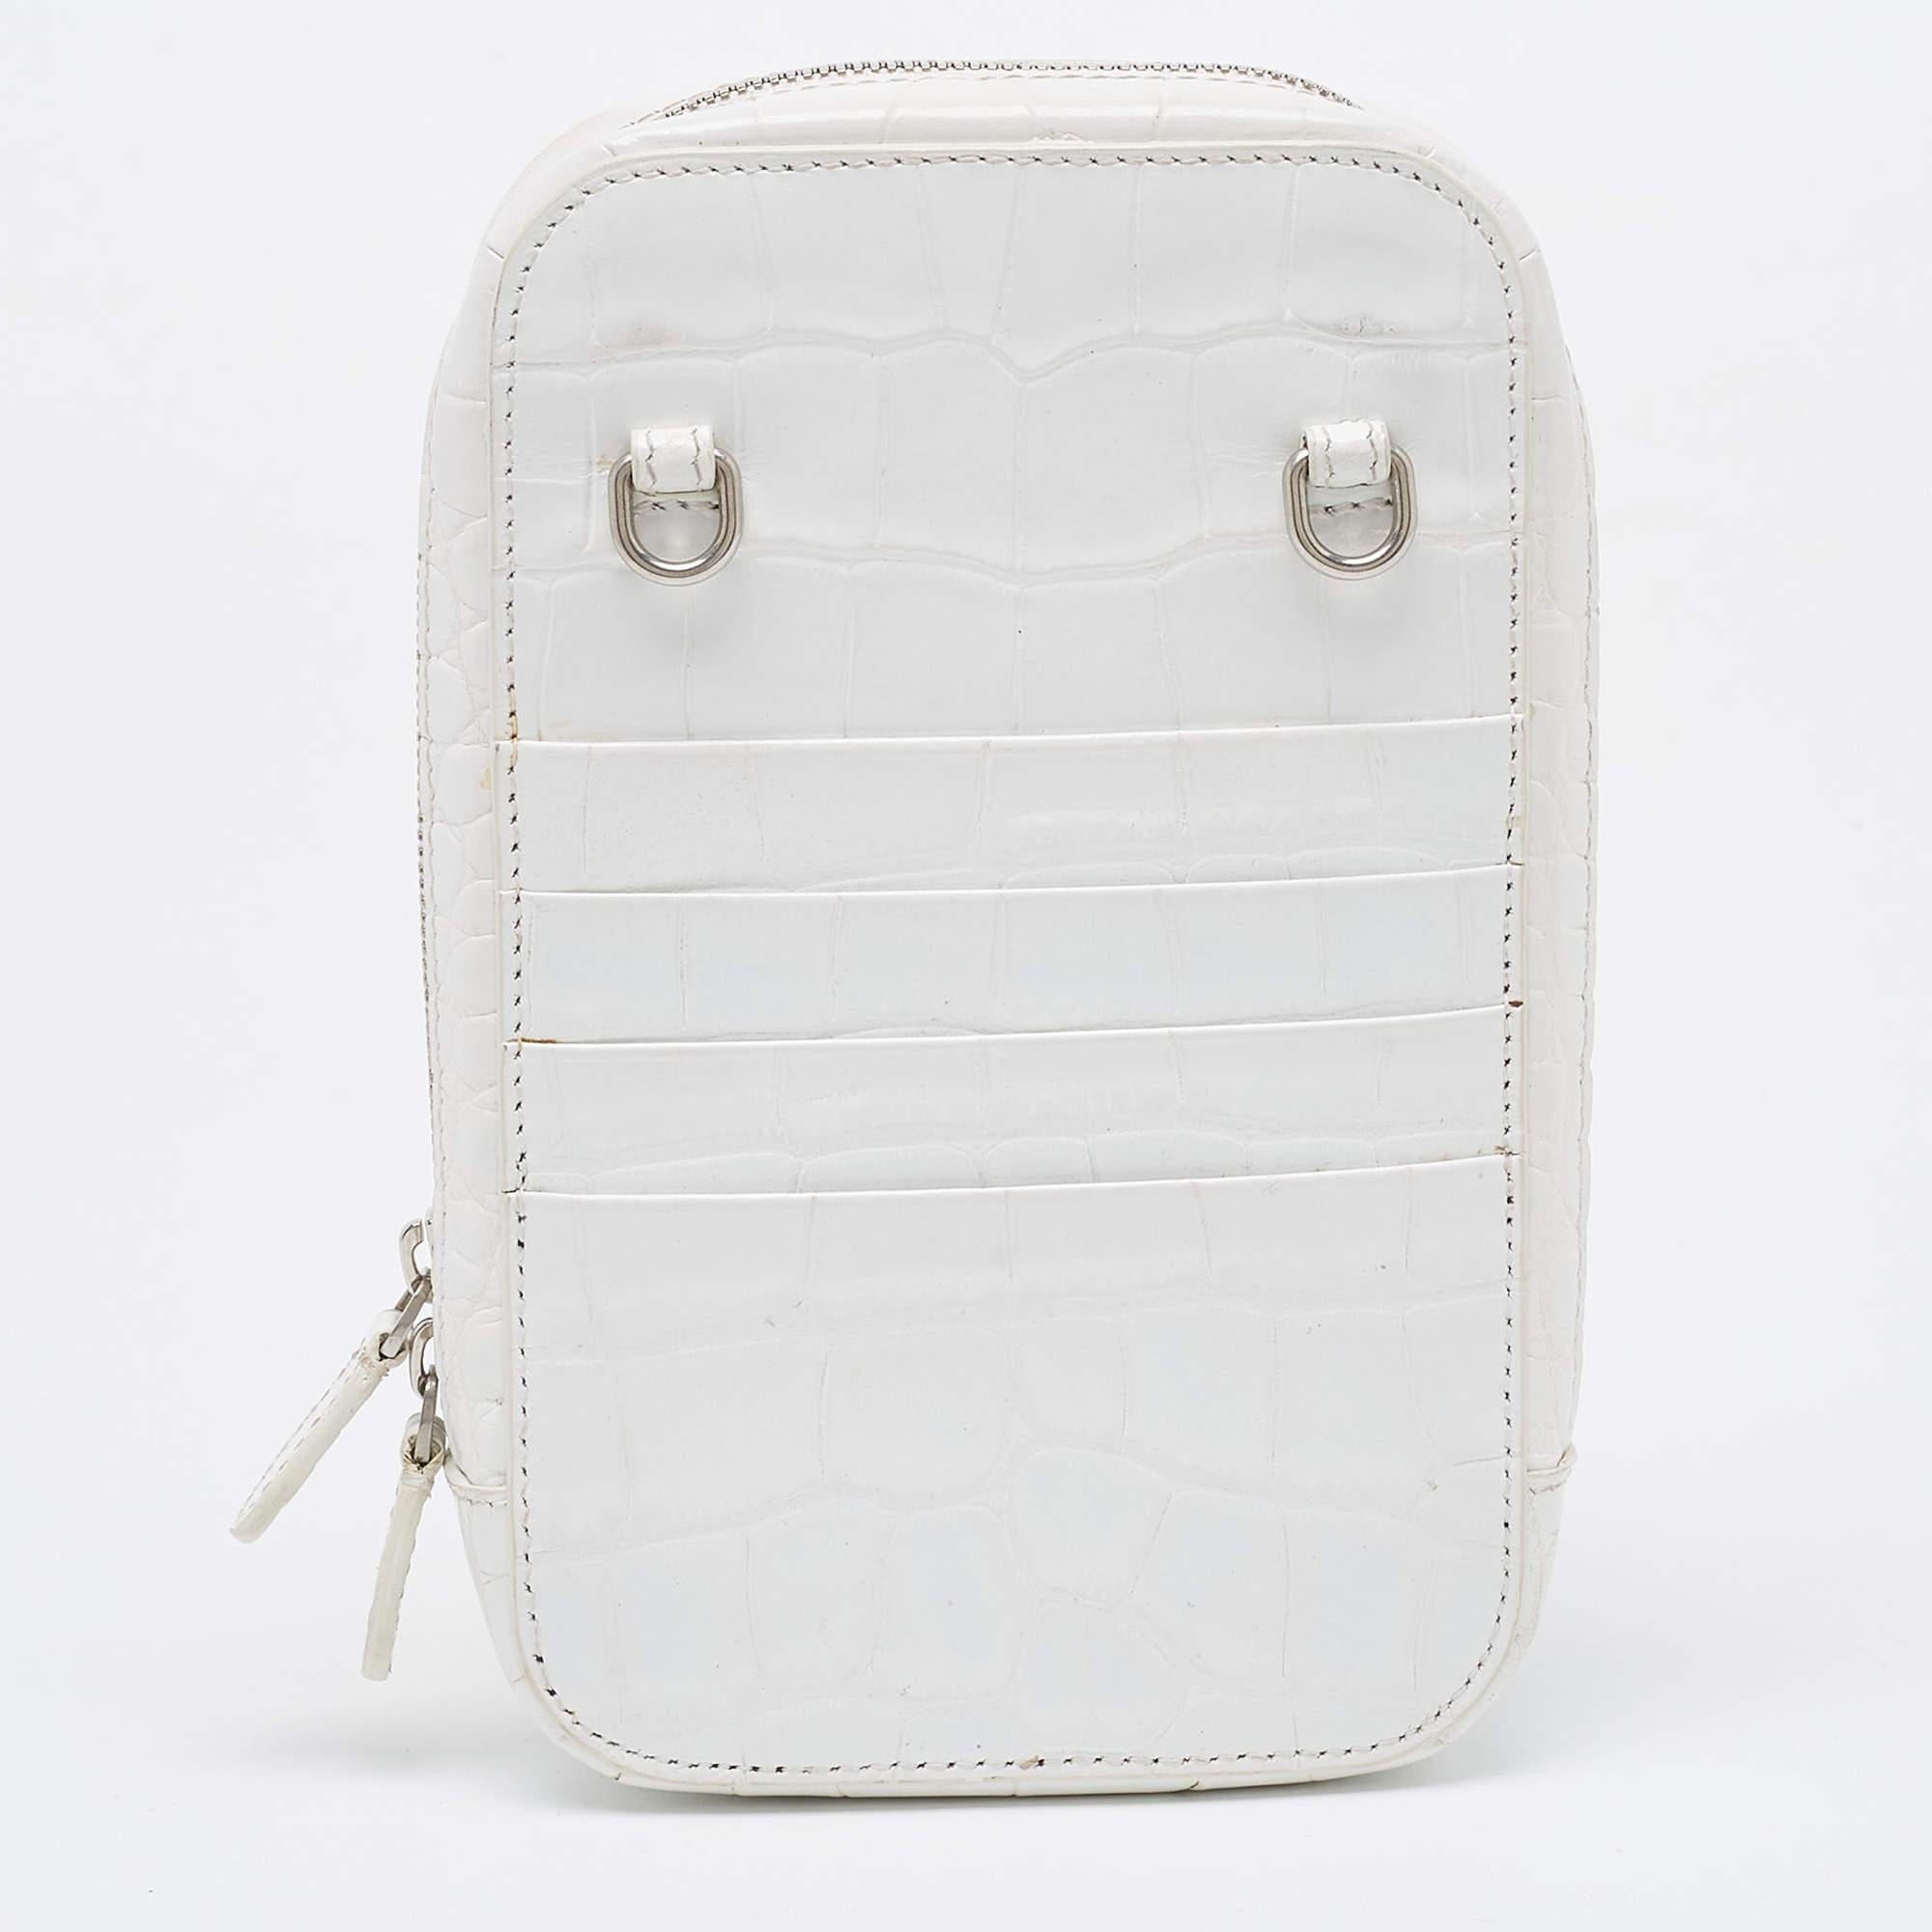 Balenciaga White Croc Embossed Leather Cash Phone Holder Bag 2